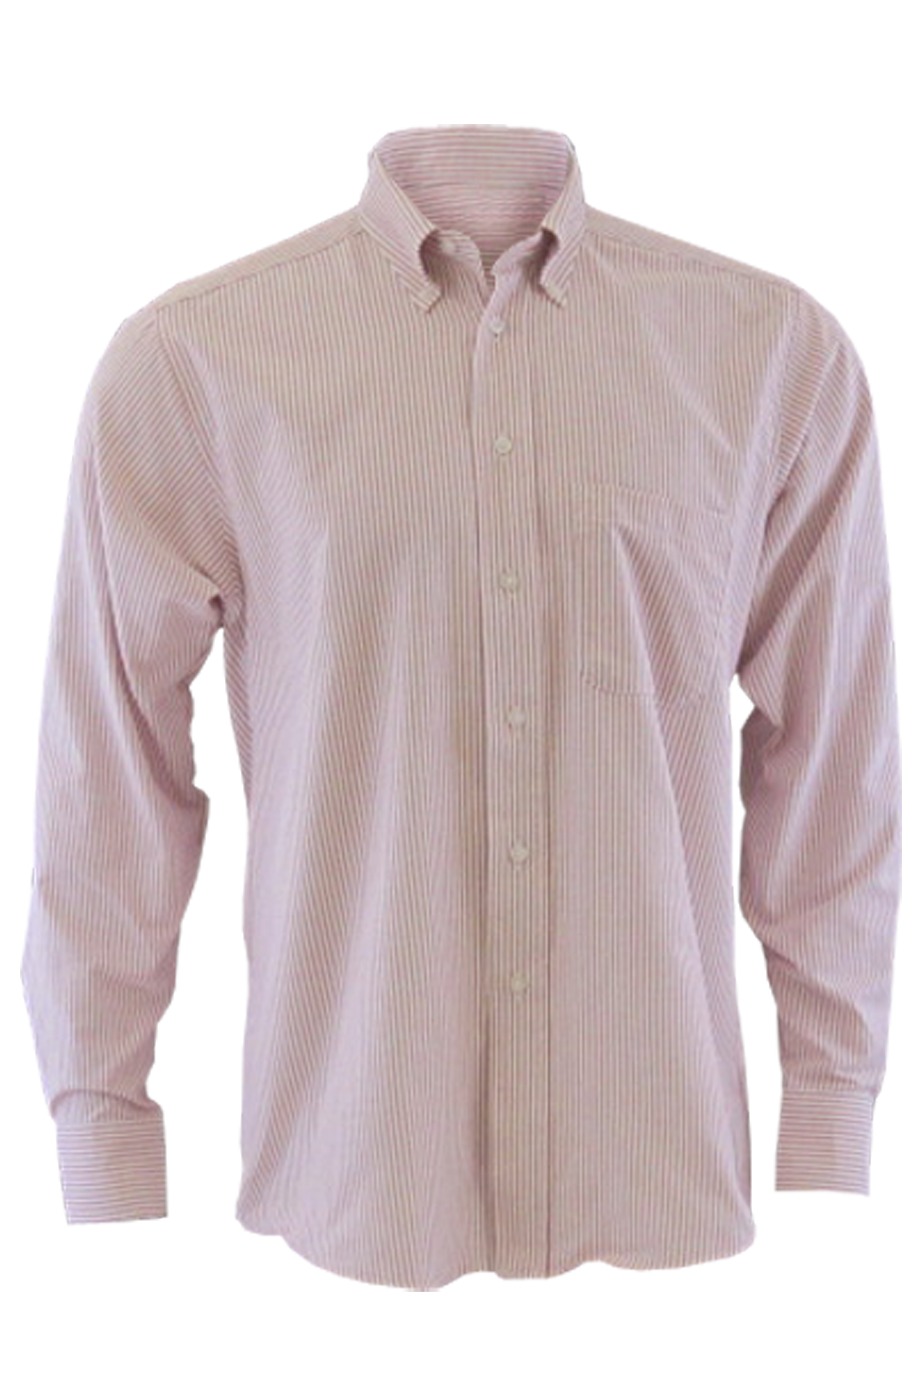 Edwards Garment 1077 - Men's Easy Care Long Sleeve Oxford